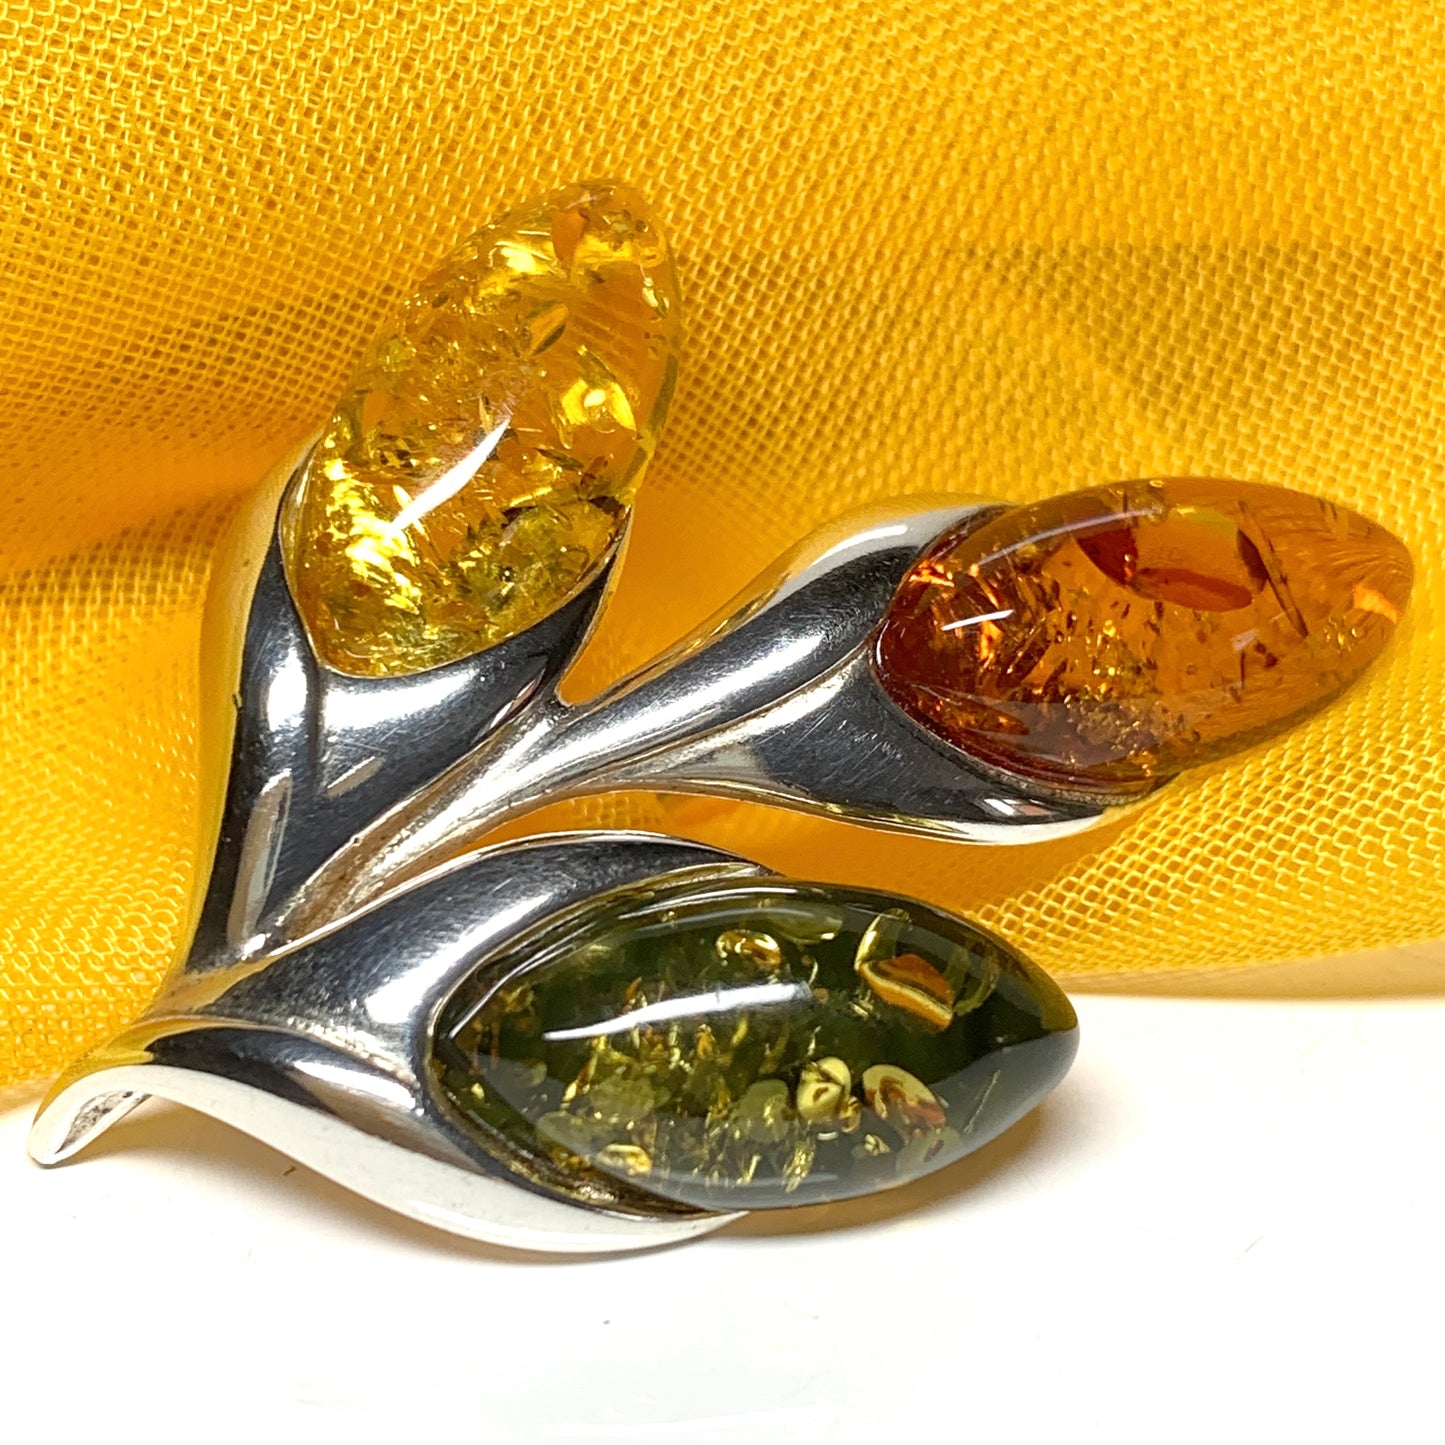 Petal silver multi coloured amber brooch